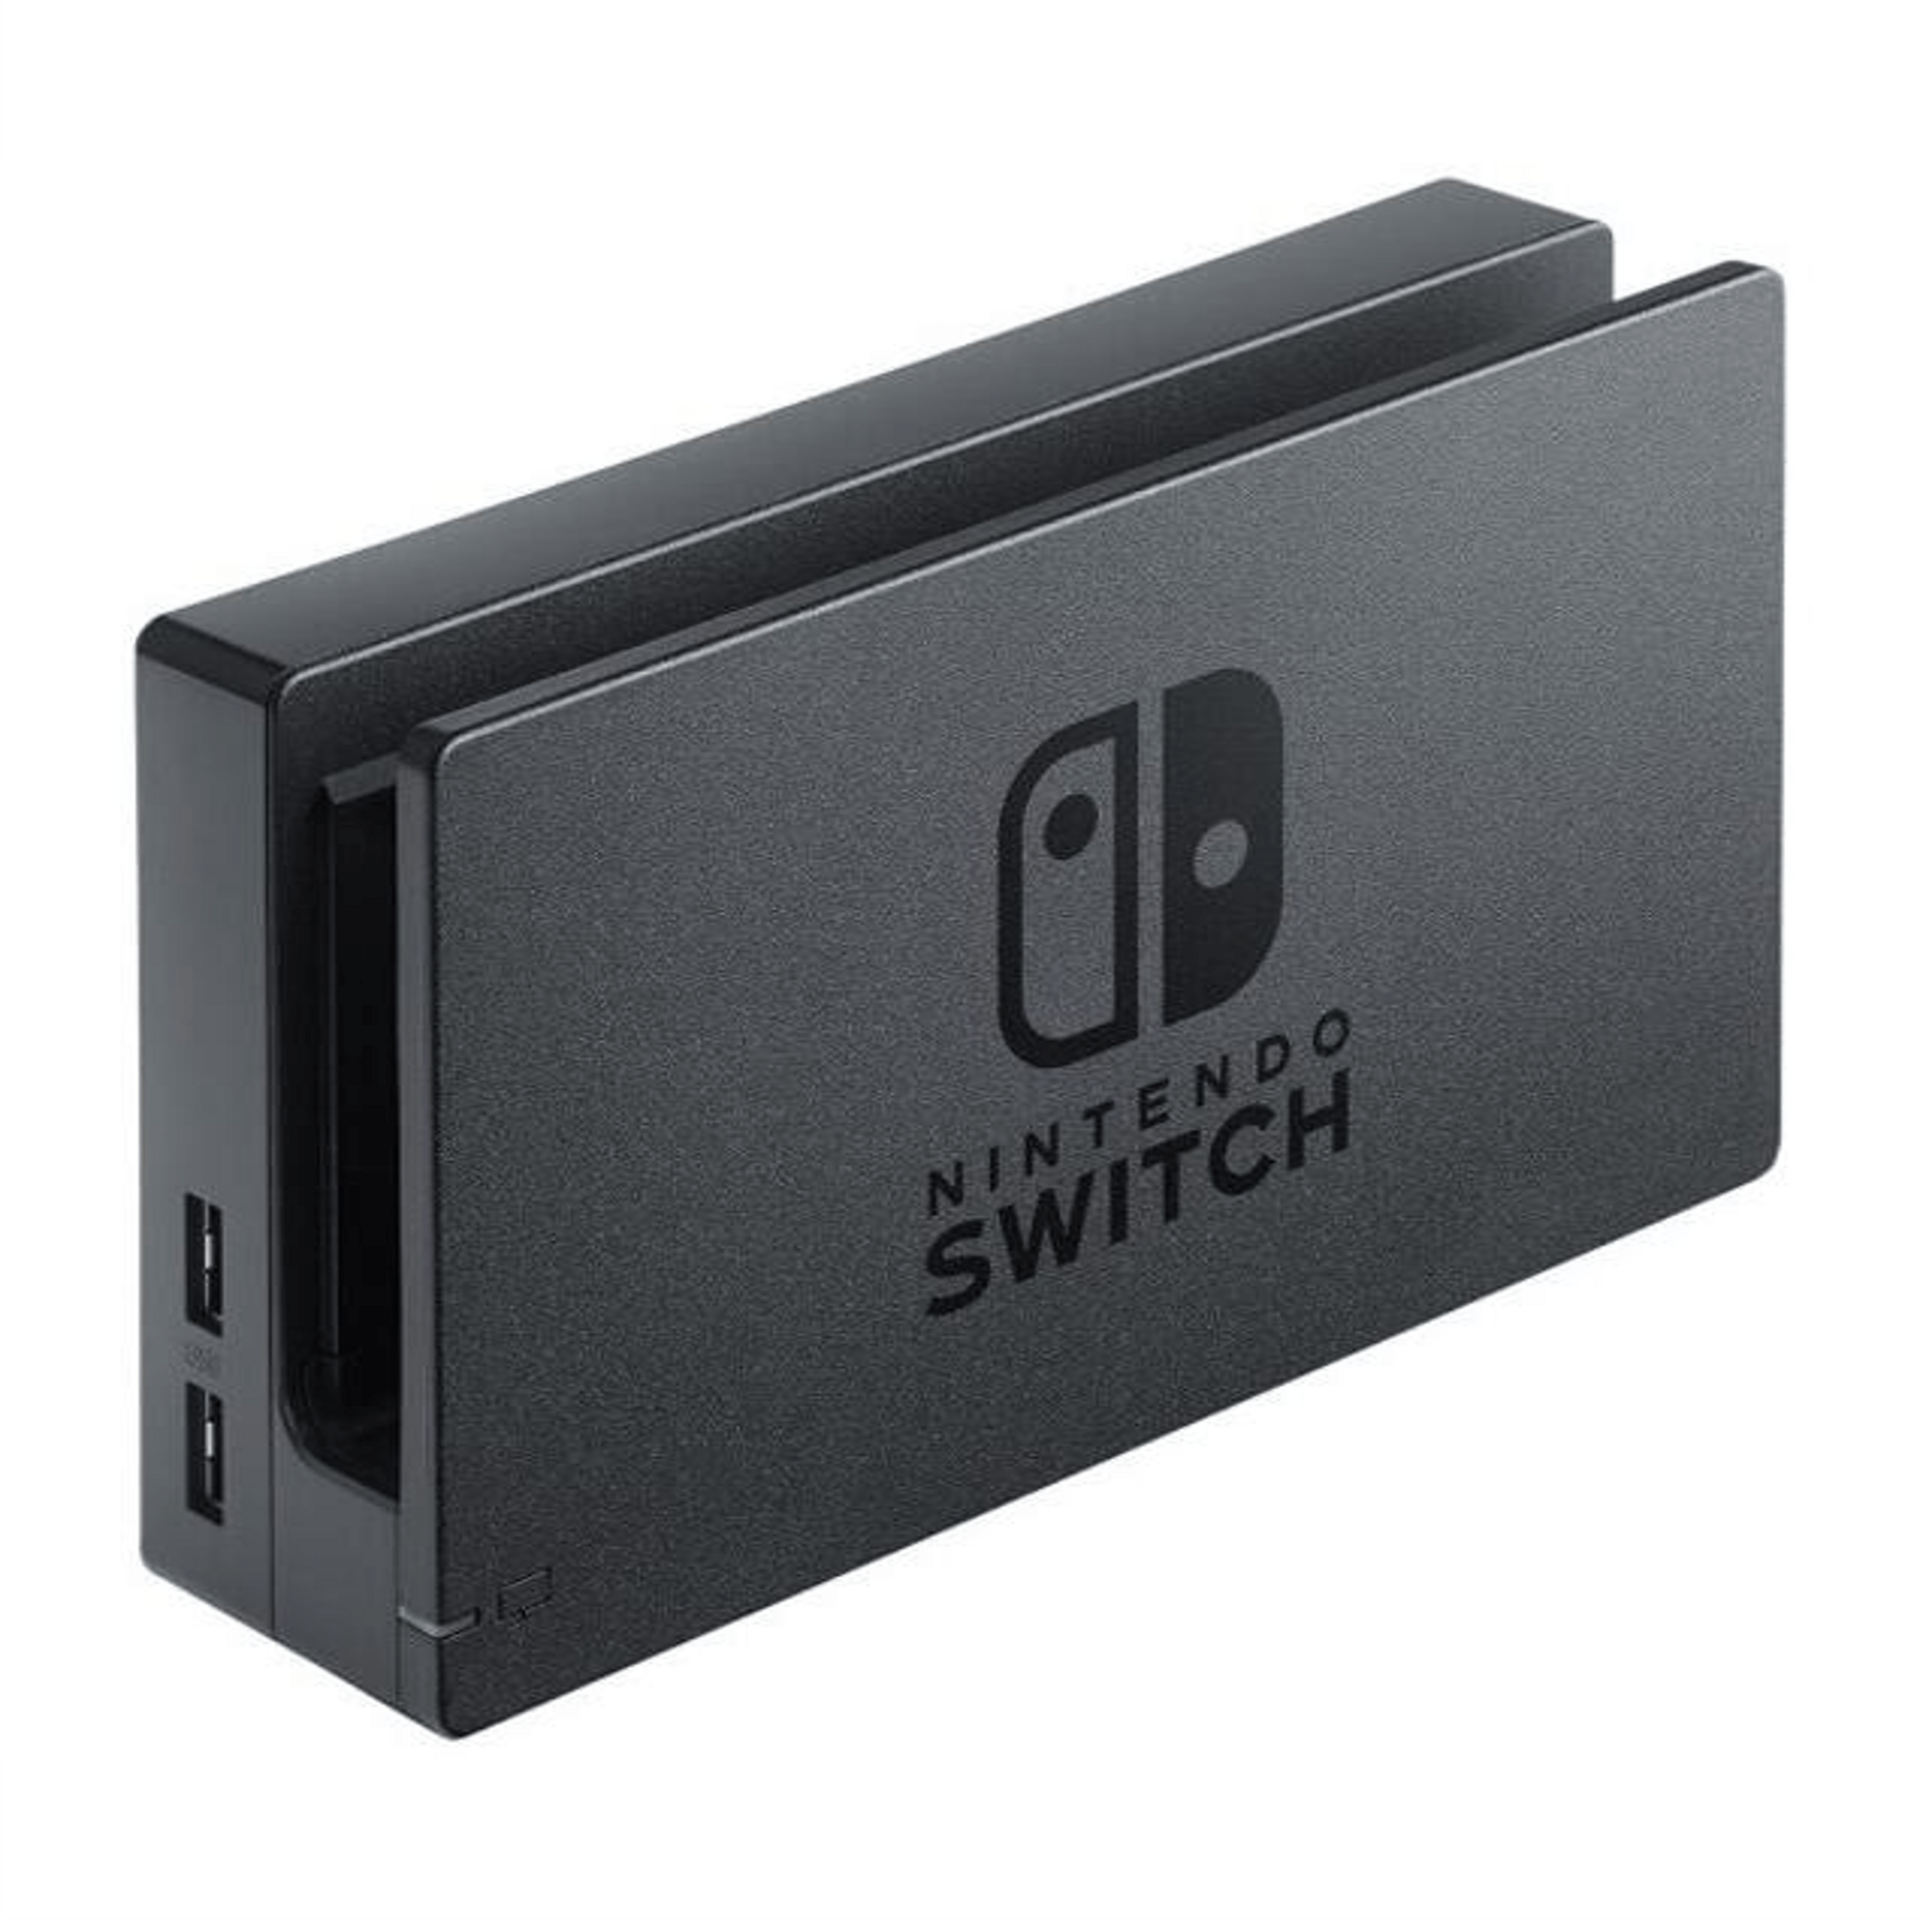 Nintendo Switch Dock (Los) - Nintendo Switch Hardware - 2